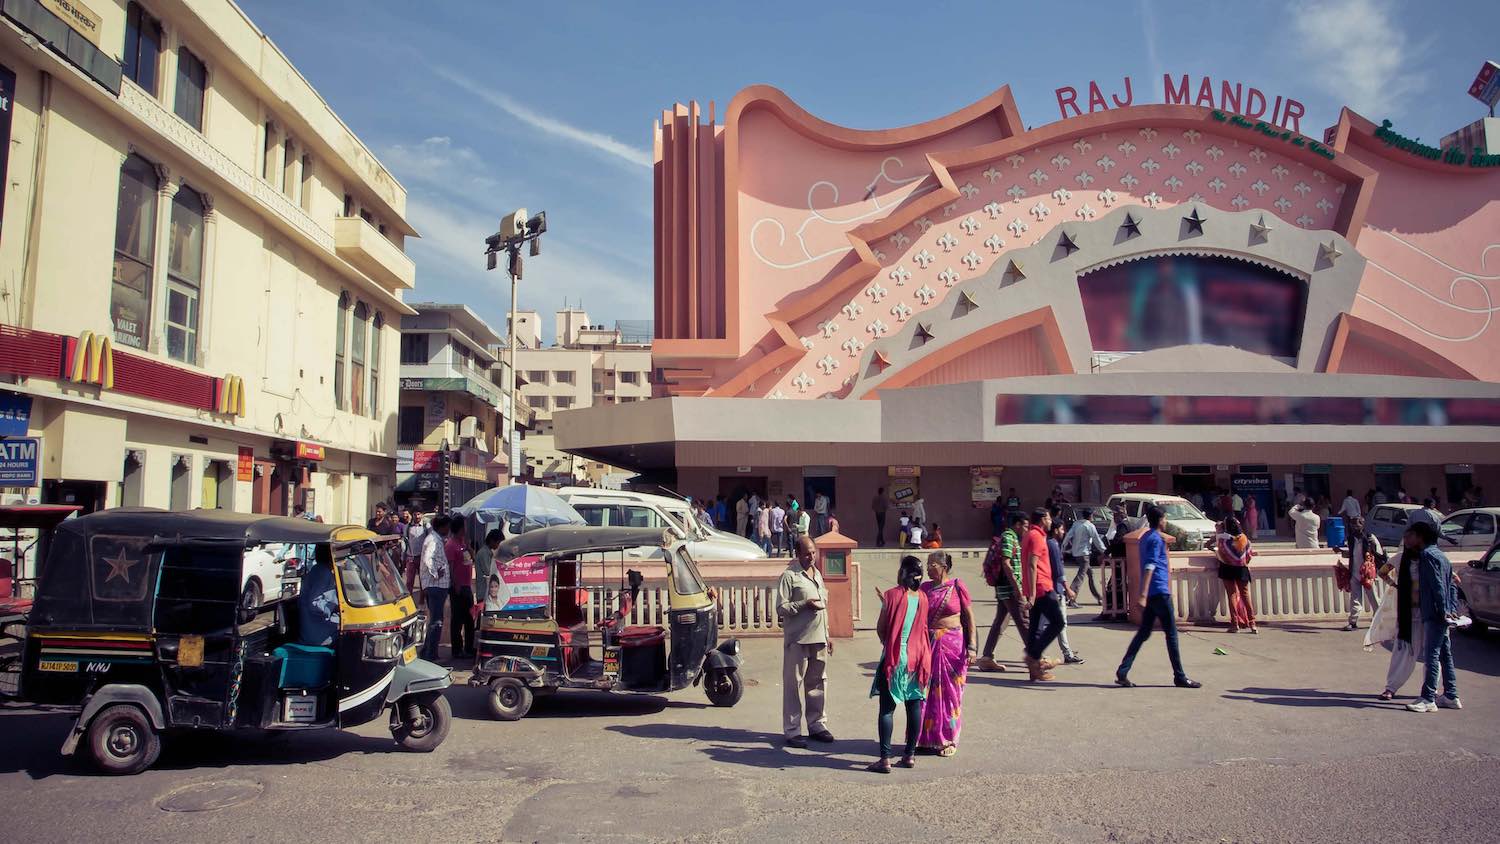 Pan India films: An optimistic gamble